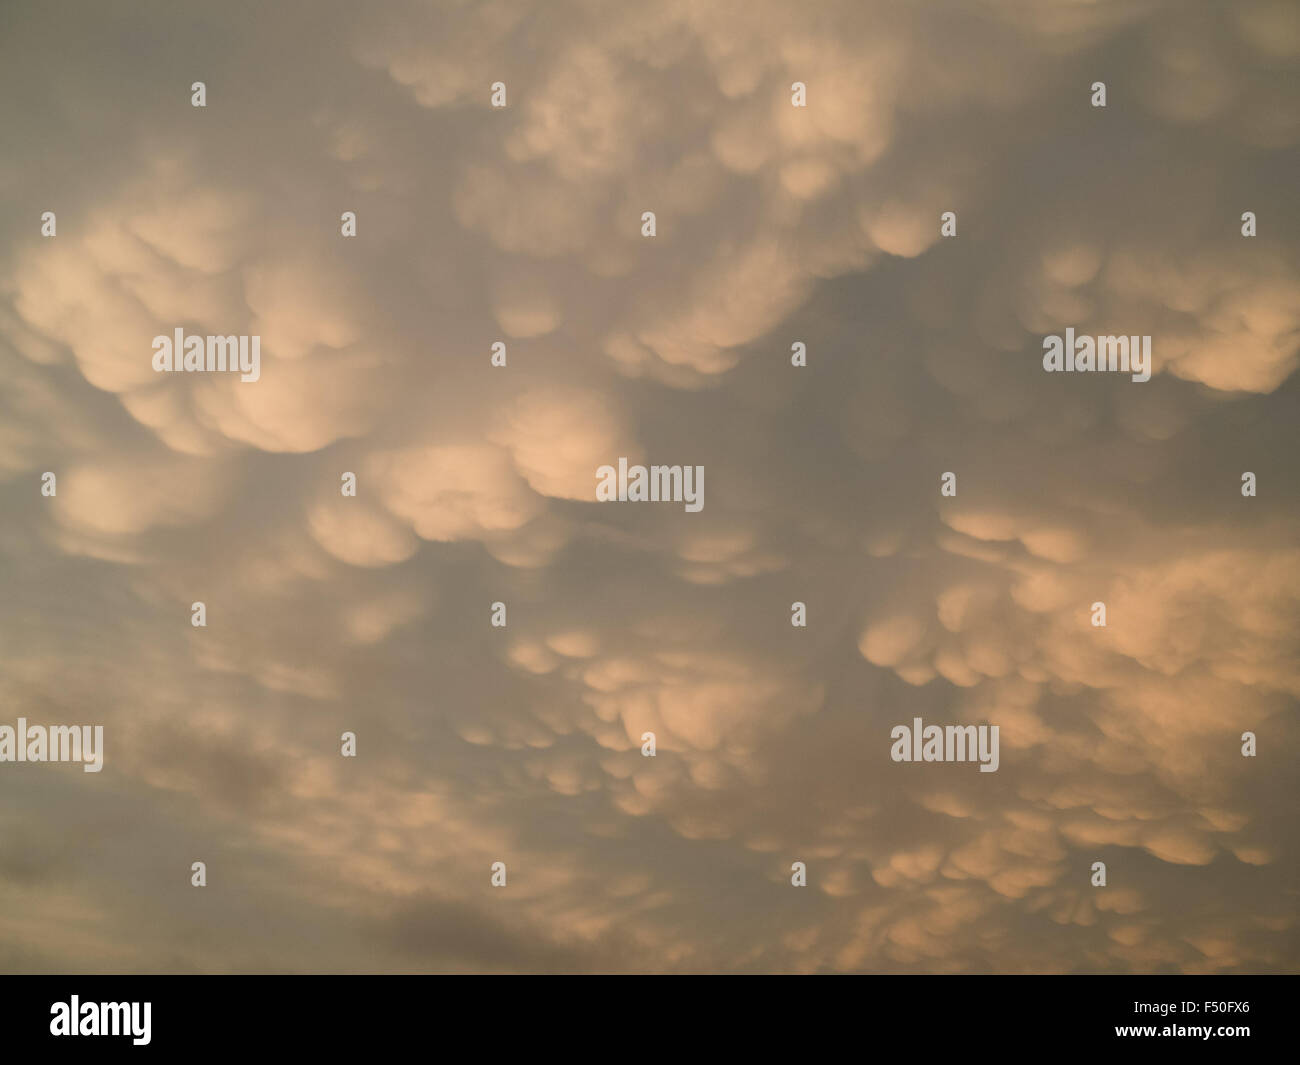 Ominous mammatus clouds at sunset Stock Photo